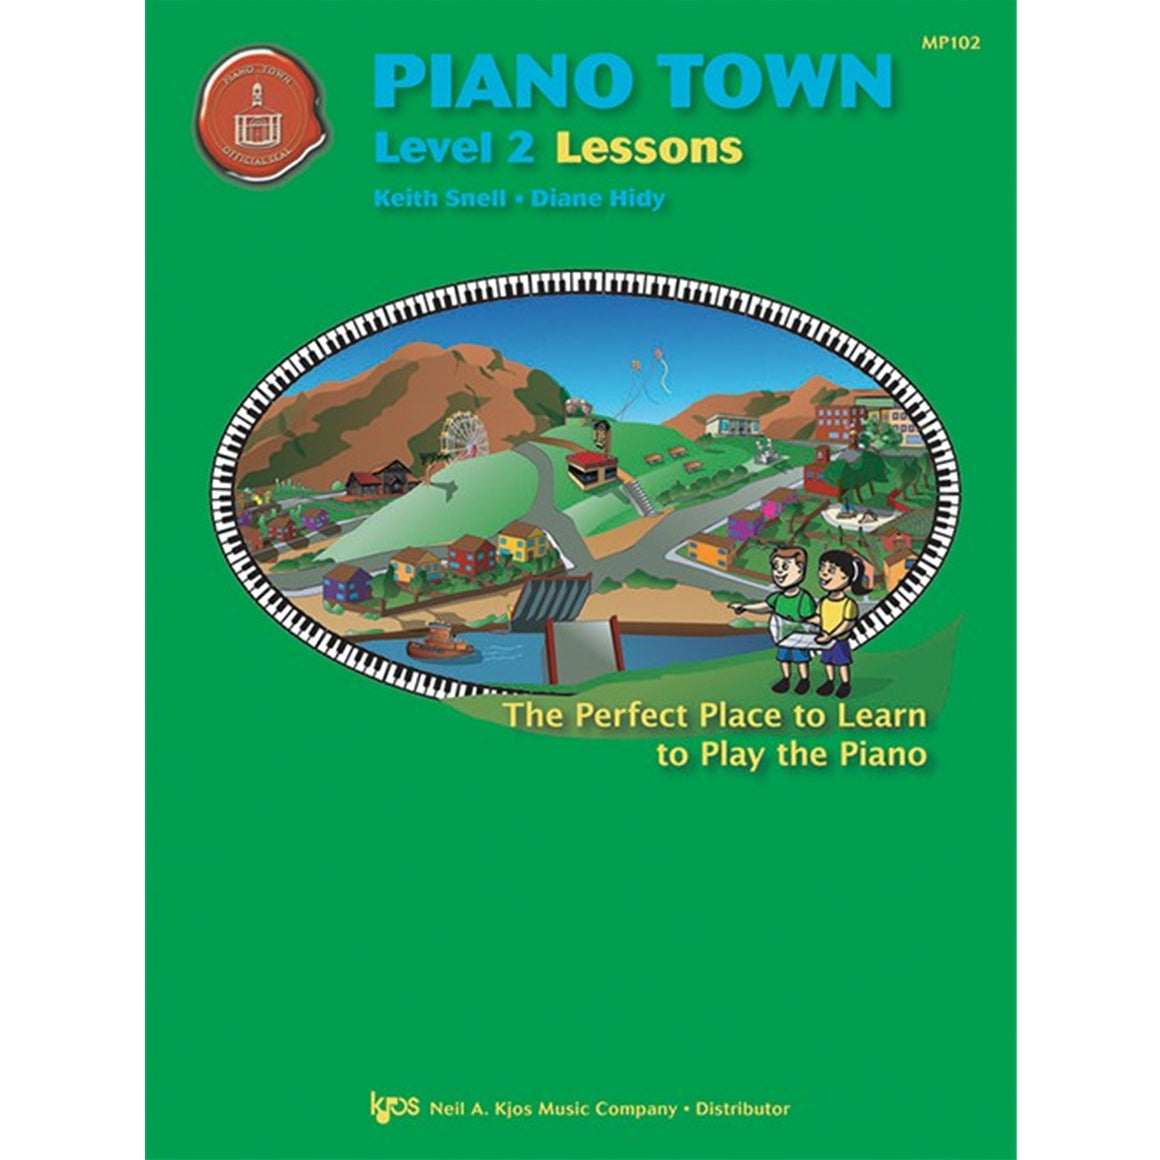 KJOS MP102 Piano Town Lesson Level 2